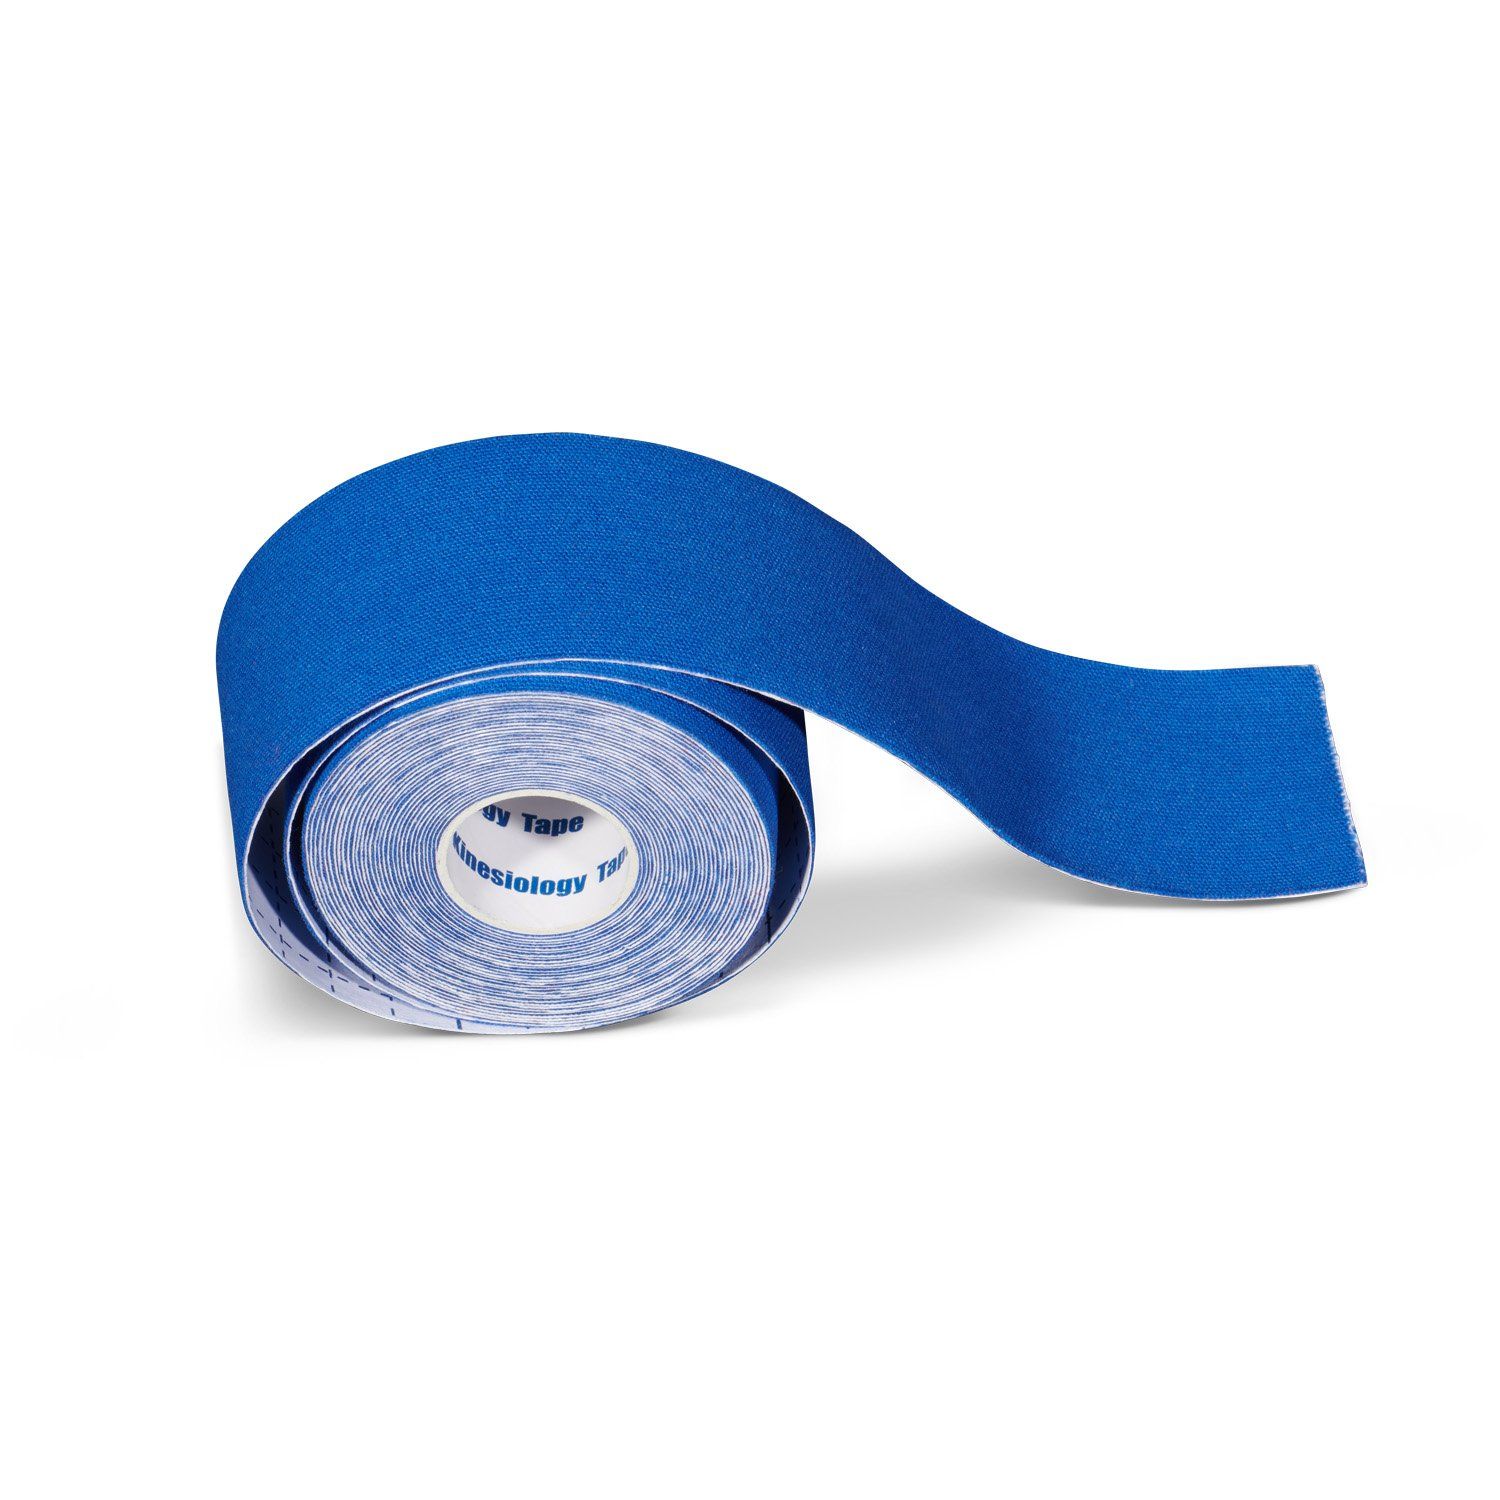 Kinesiology tape 6 rolls plus 2 rolls for free dark blue